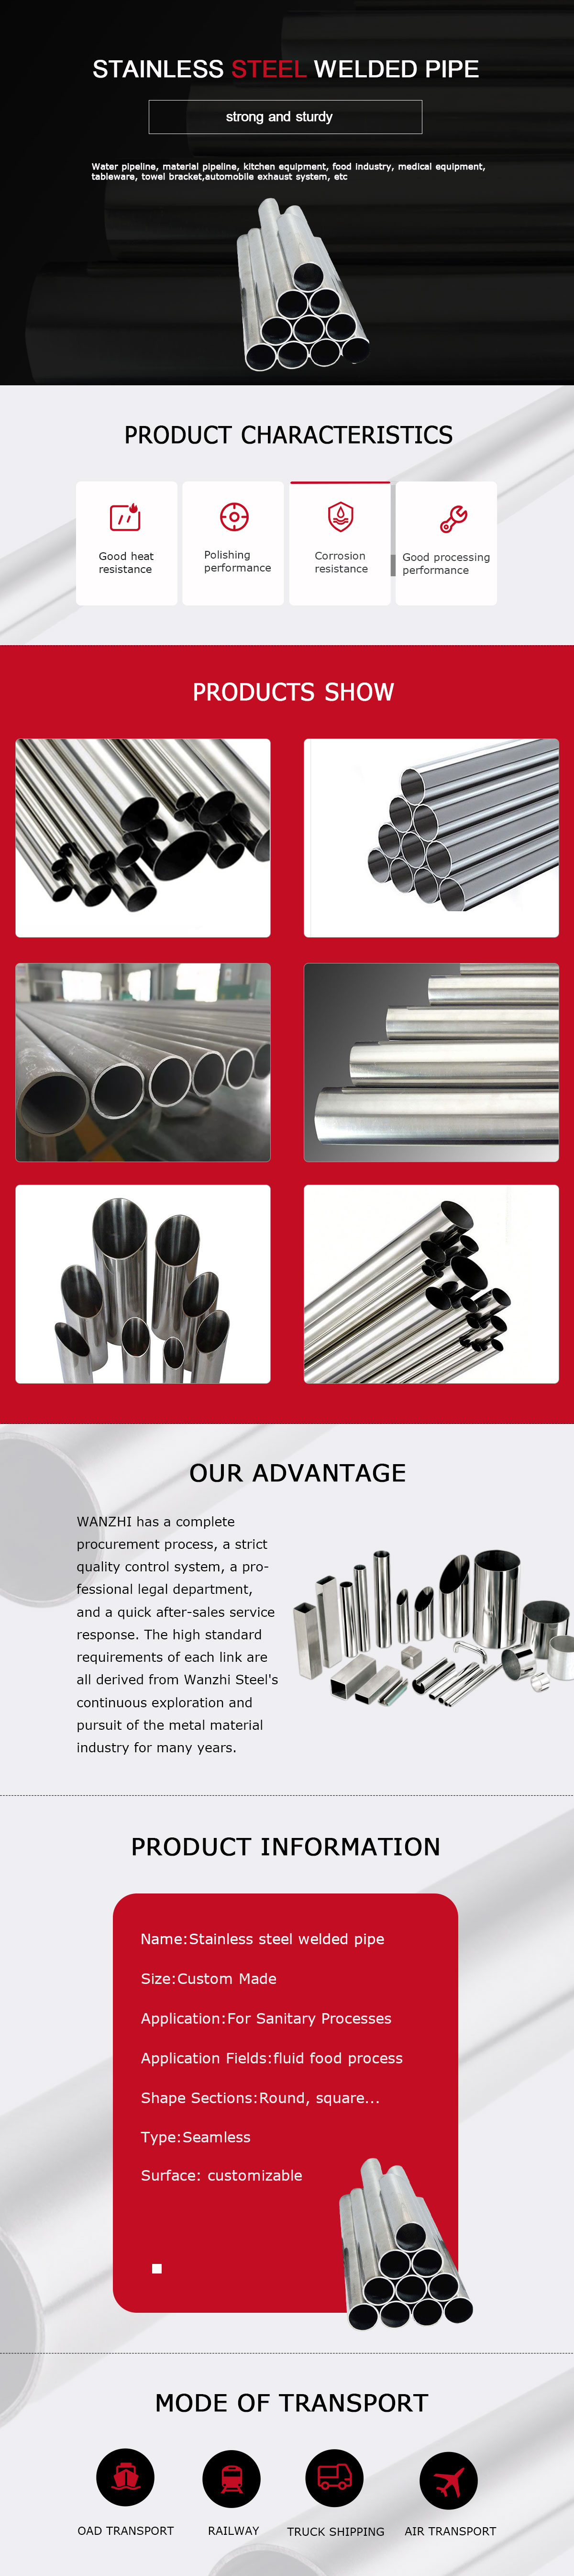 不锈钢焊管（Stainless-steel-welded-pipe）.jpg